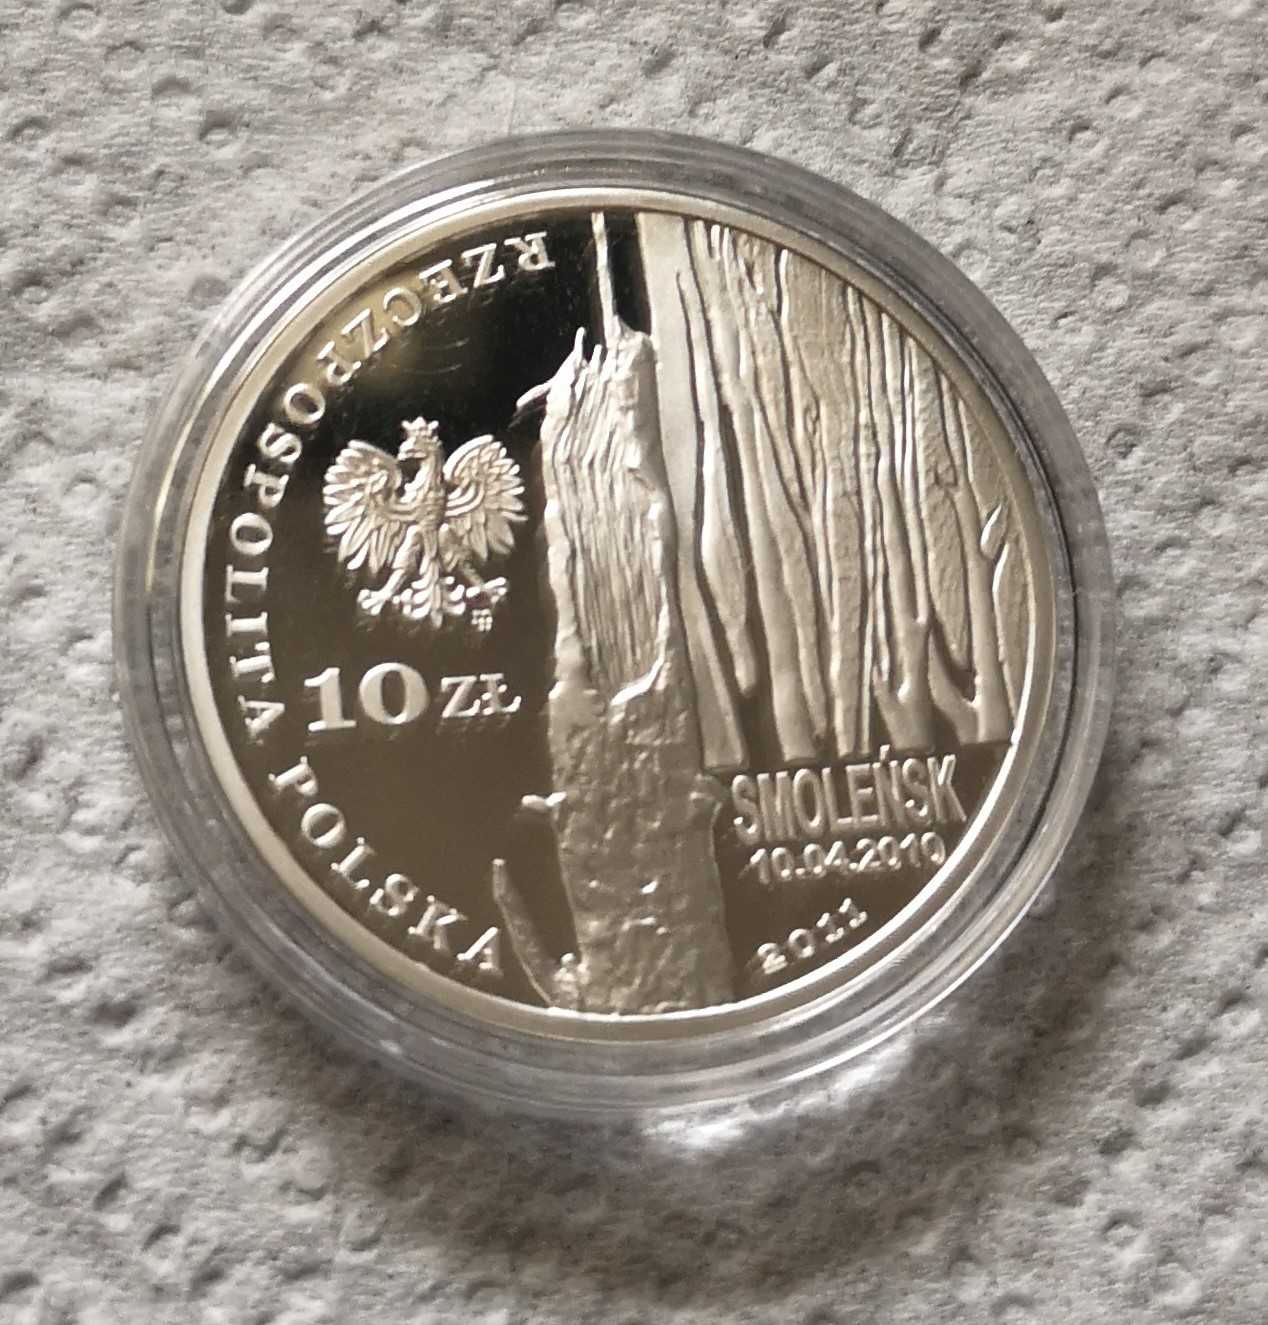 Moneta kolekcjonerska 10 zł 2011 r. Smoleńsk Sławomir Skrzypek